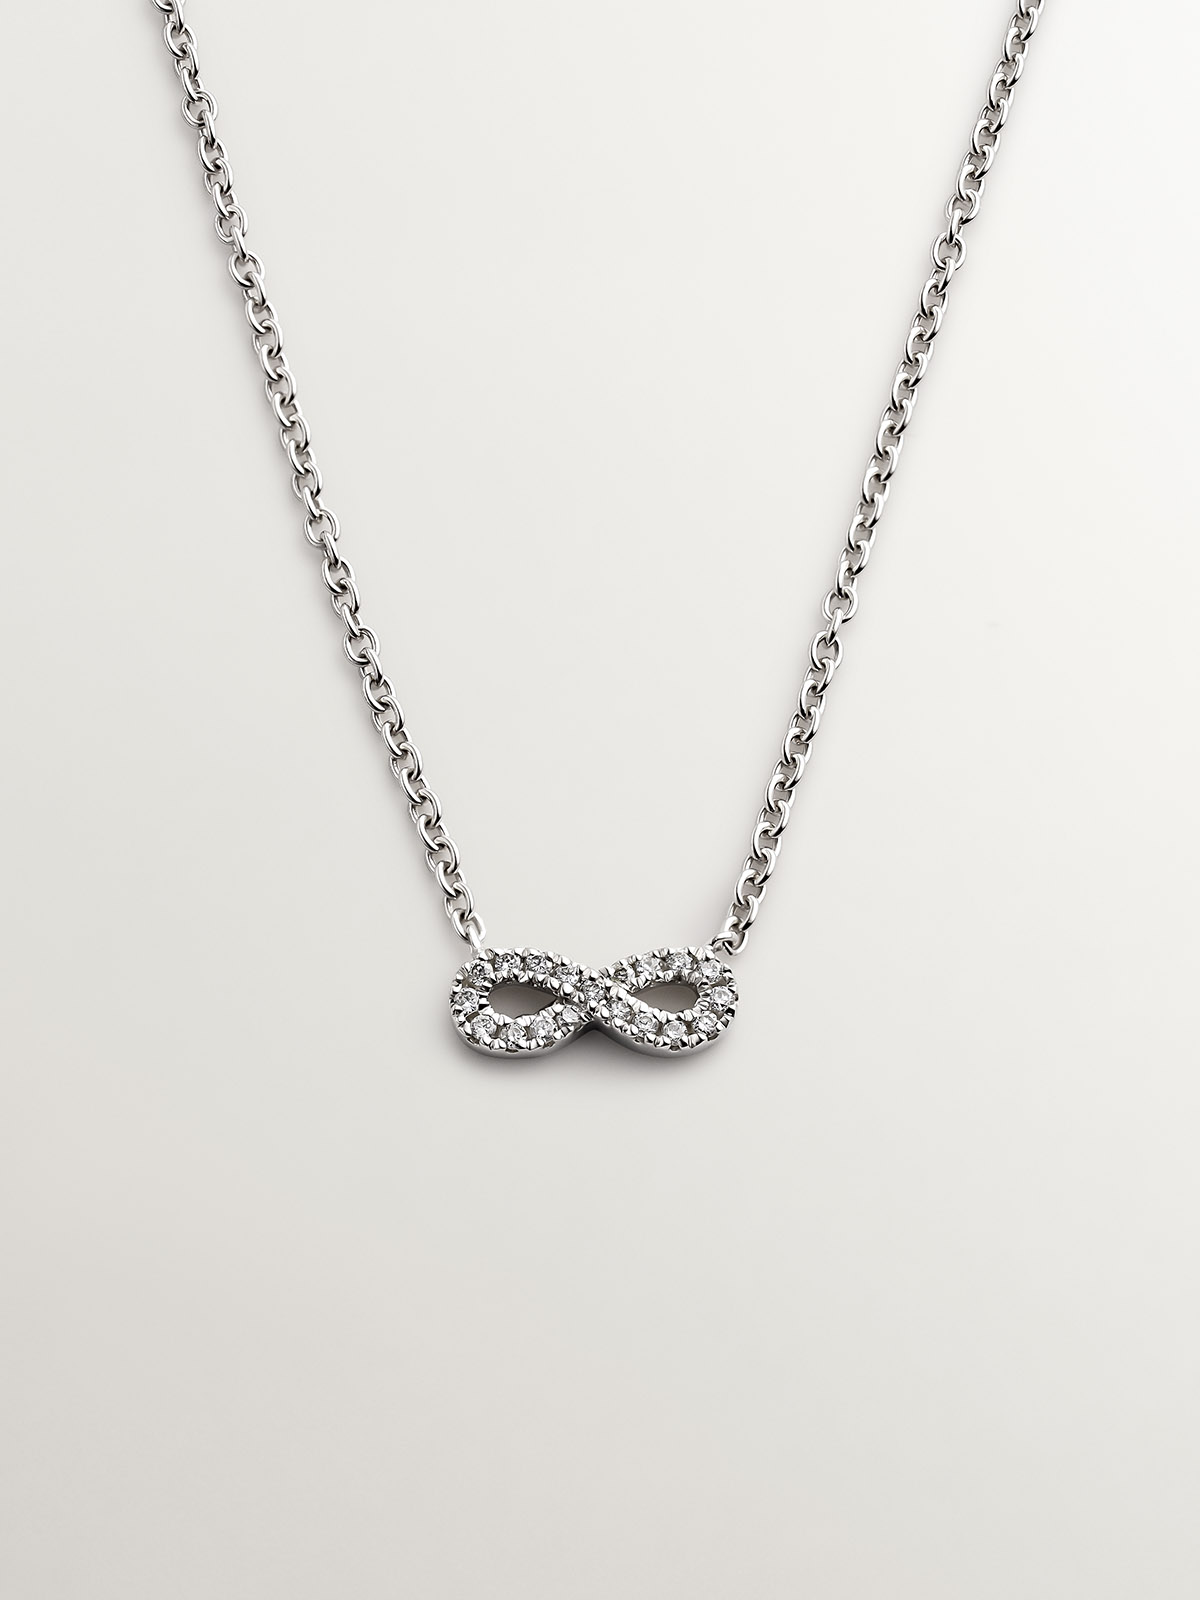 18K white gold pendant with infinity diamonds